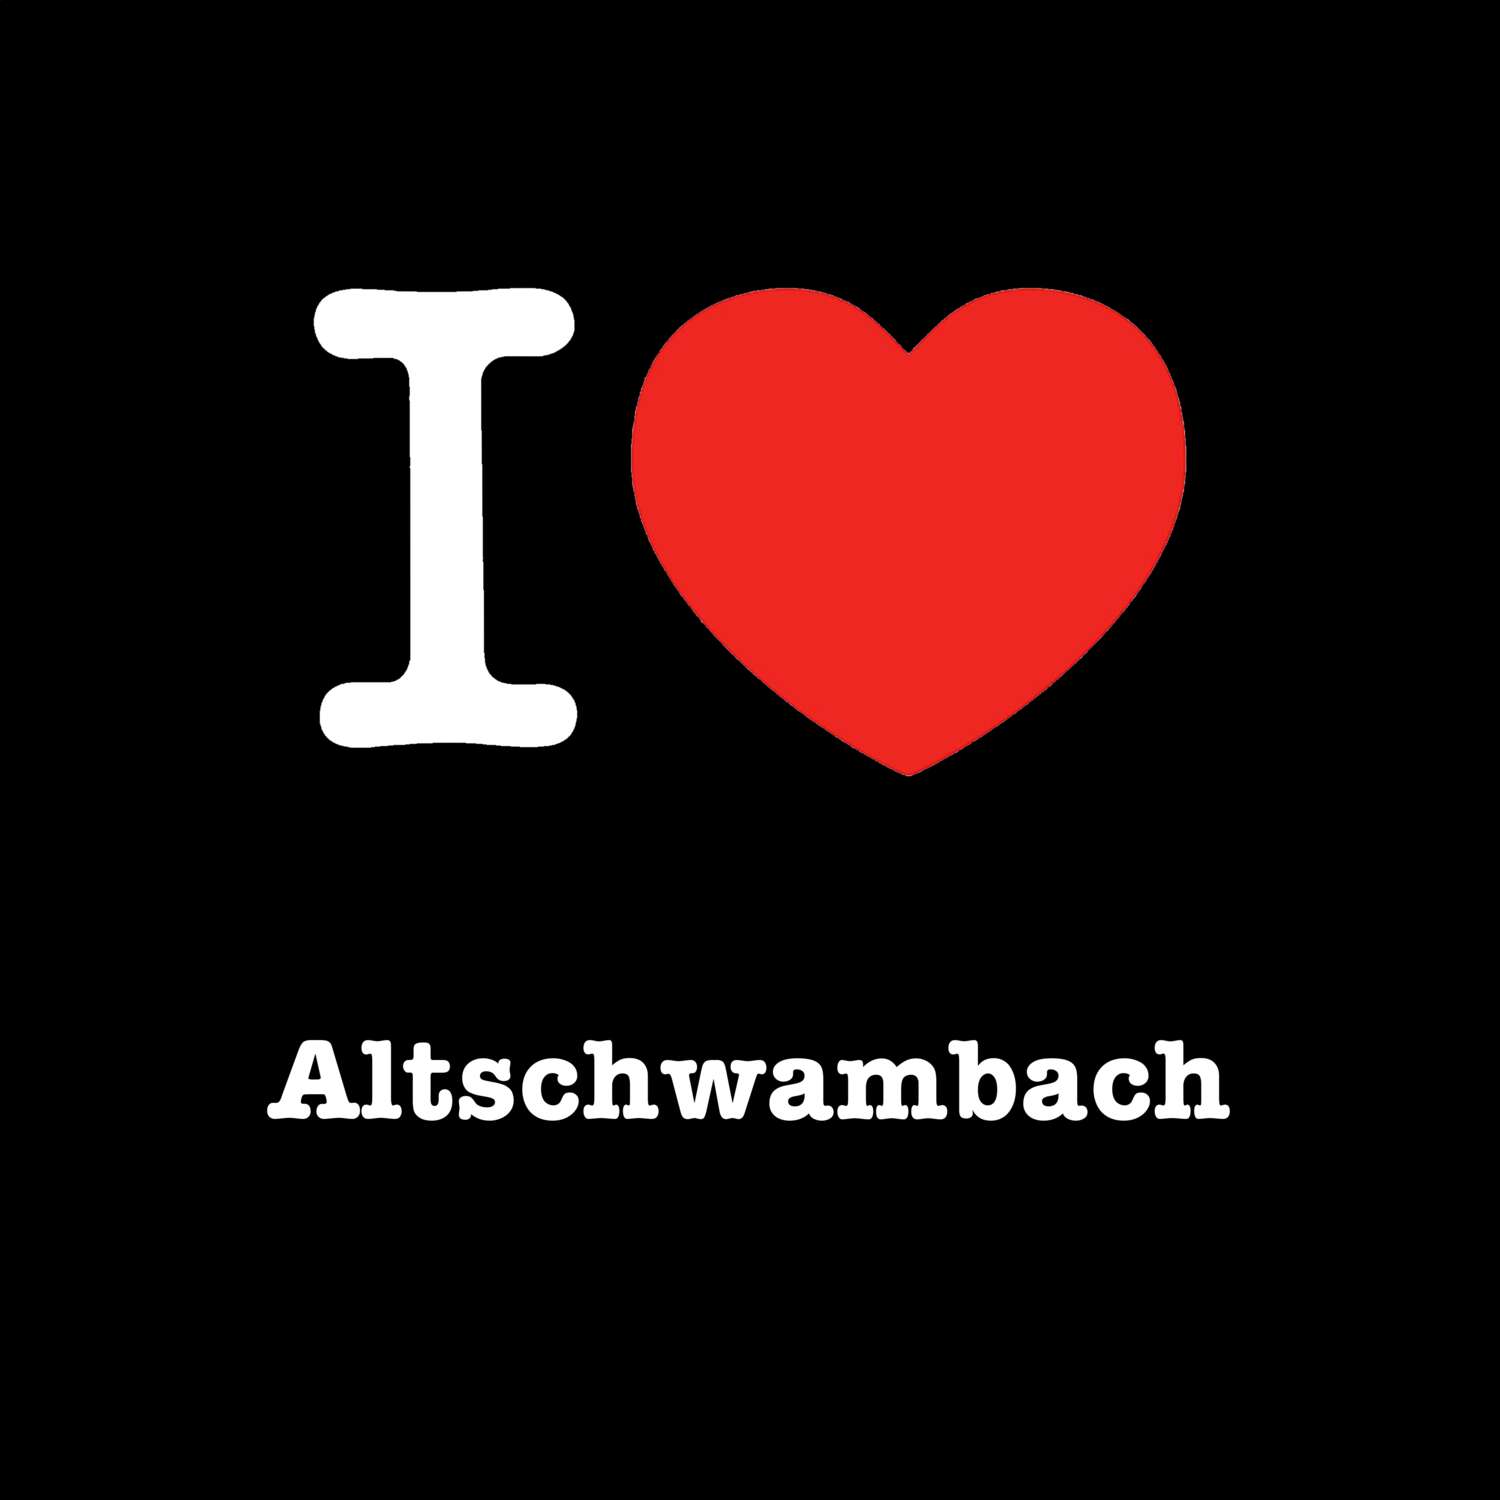 Altschwambach T-Shirt »I love«